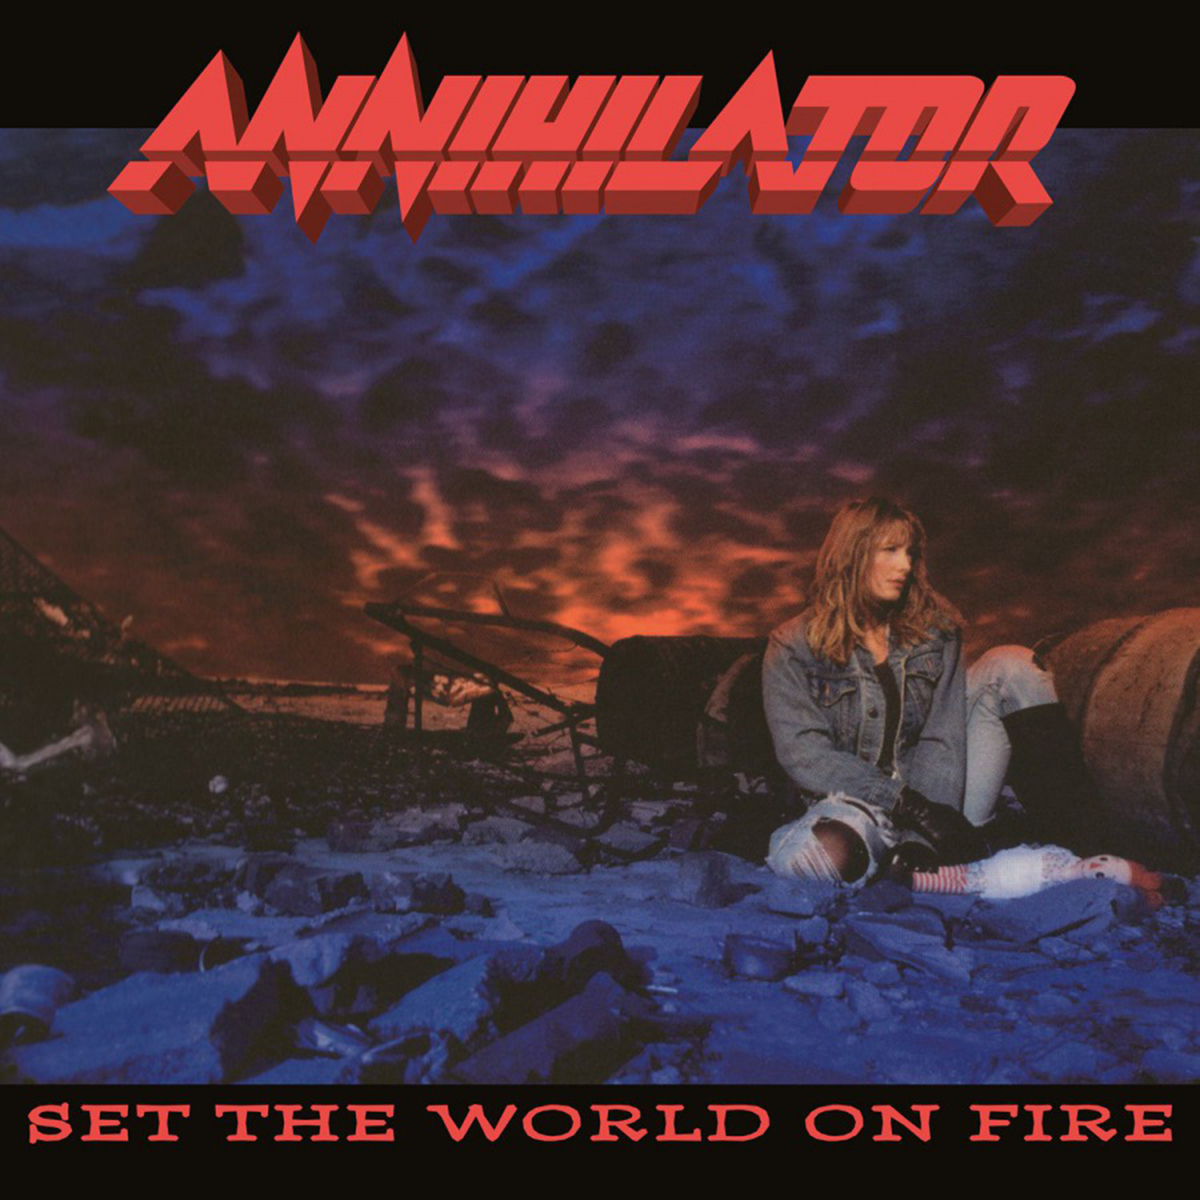 Виниловая пластинка Annihilator, Set The World On Fire (8719262028272) виниловые пластинки music on vinyl annihilator set the world on fire lp